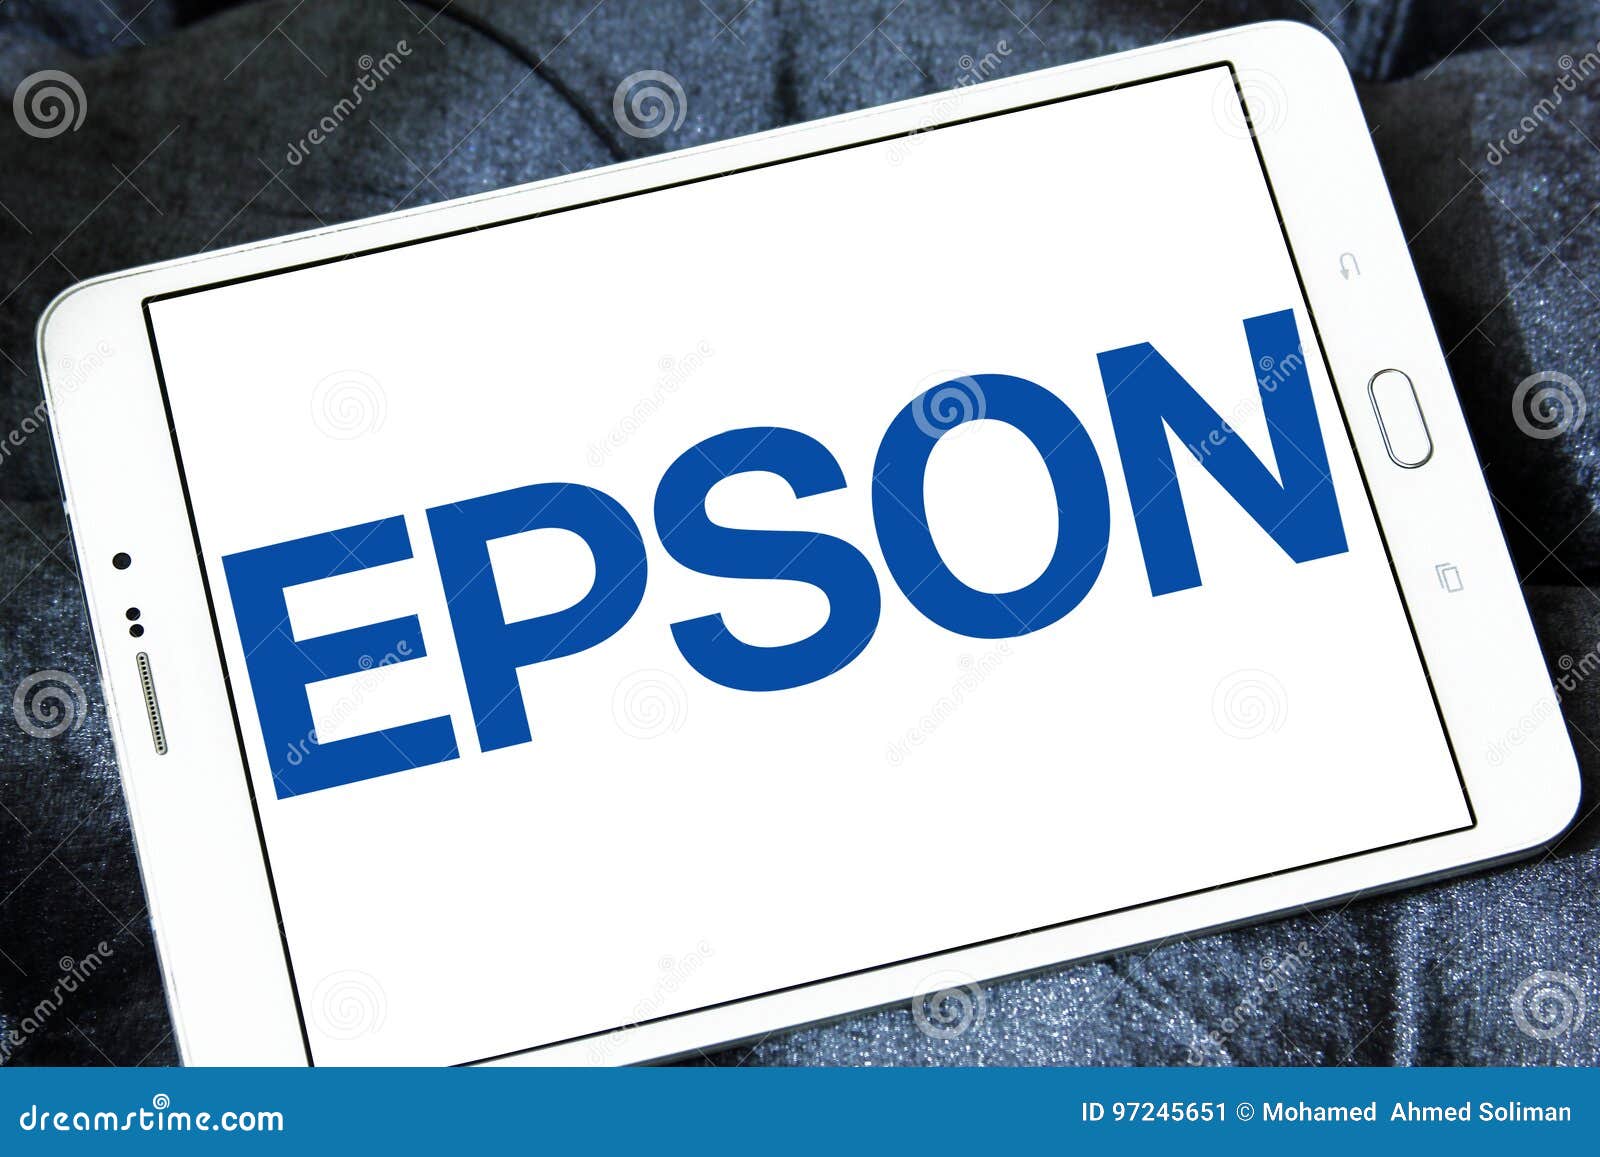 epson company